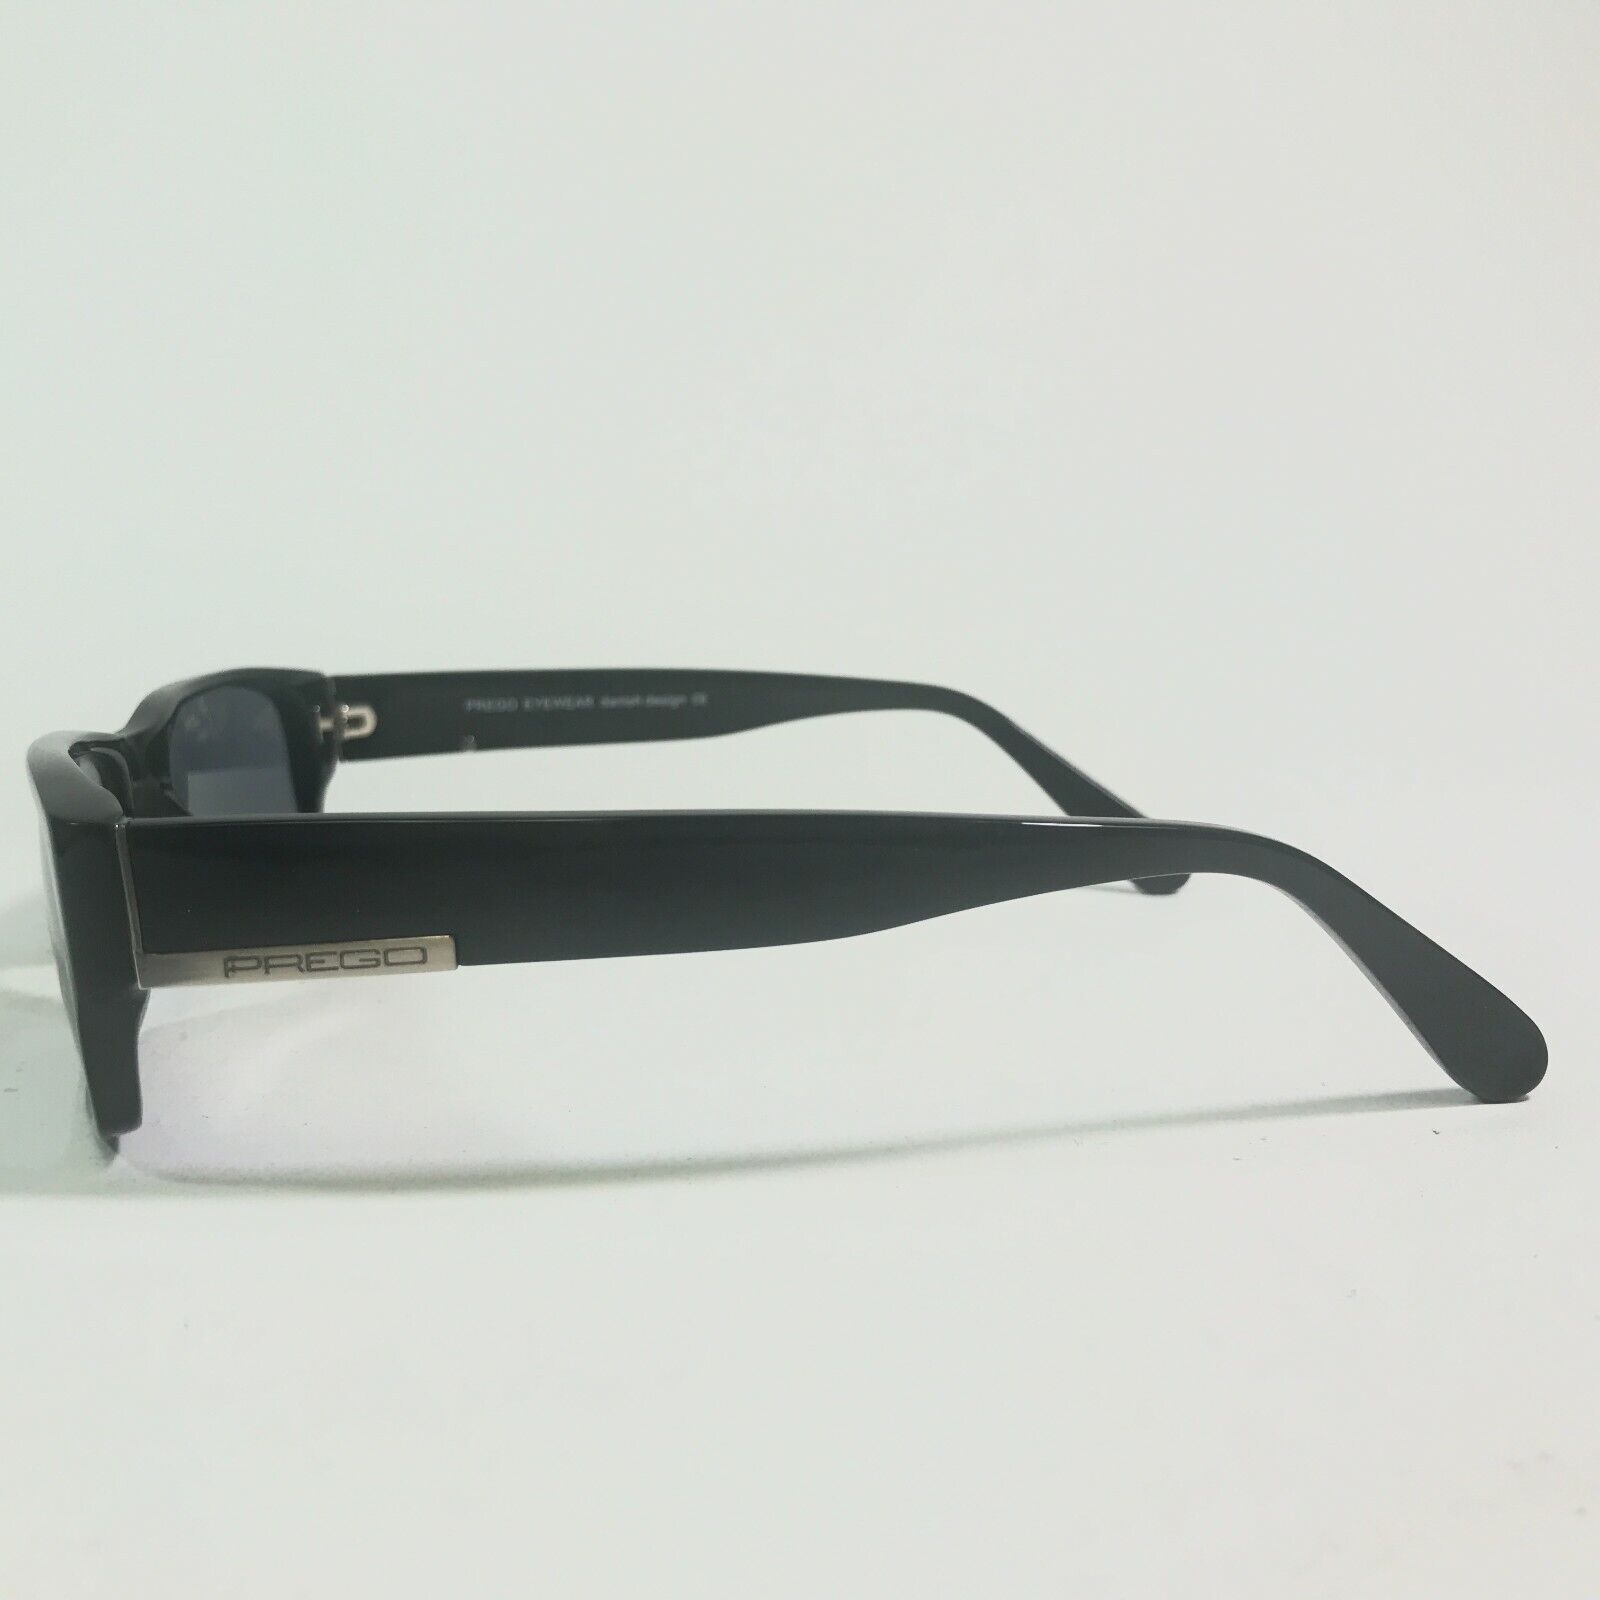 undskylde Caroline spand Prego Sunglasses 51890-00 CR-39 BC6 Black Rectangular Frames with Blue  Lenses | eBay